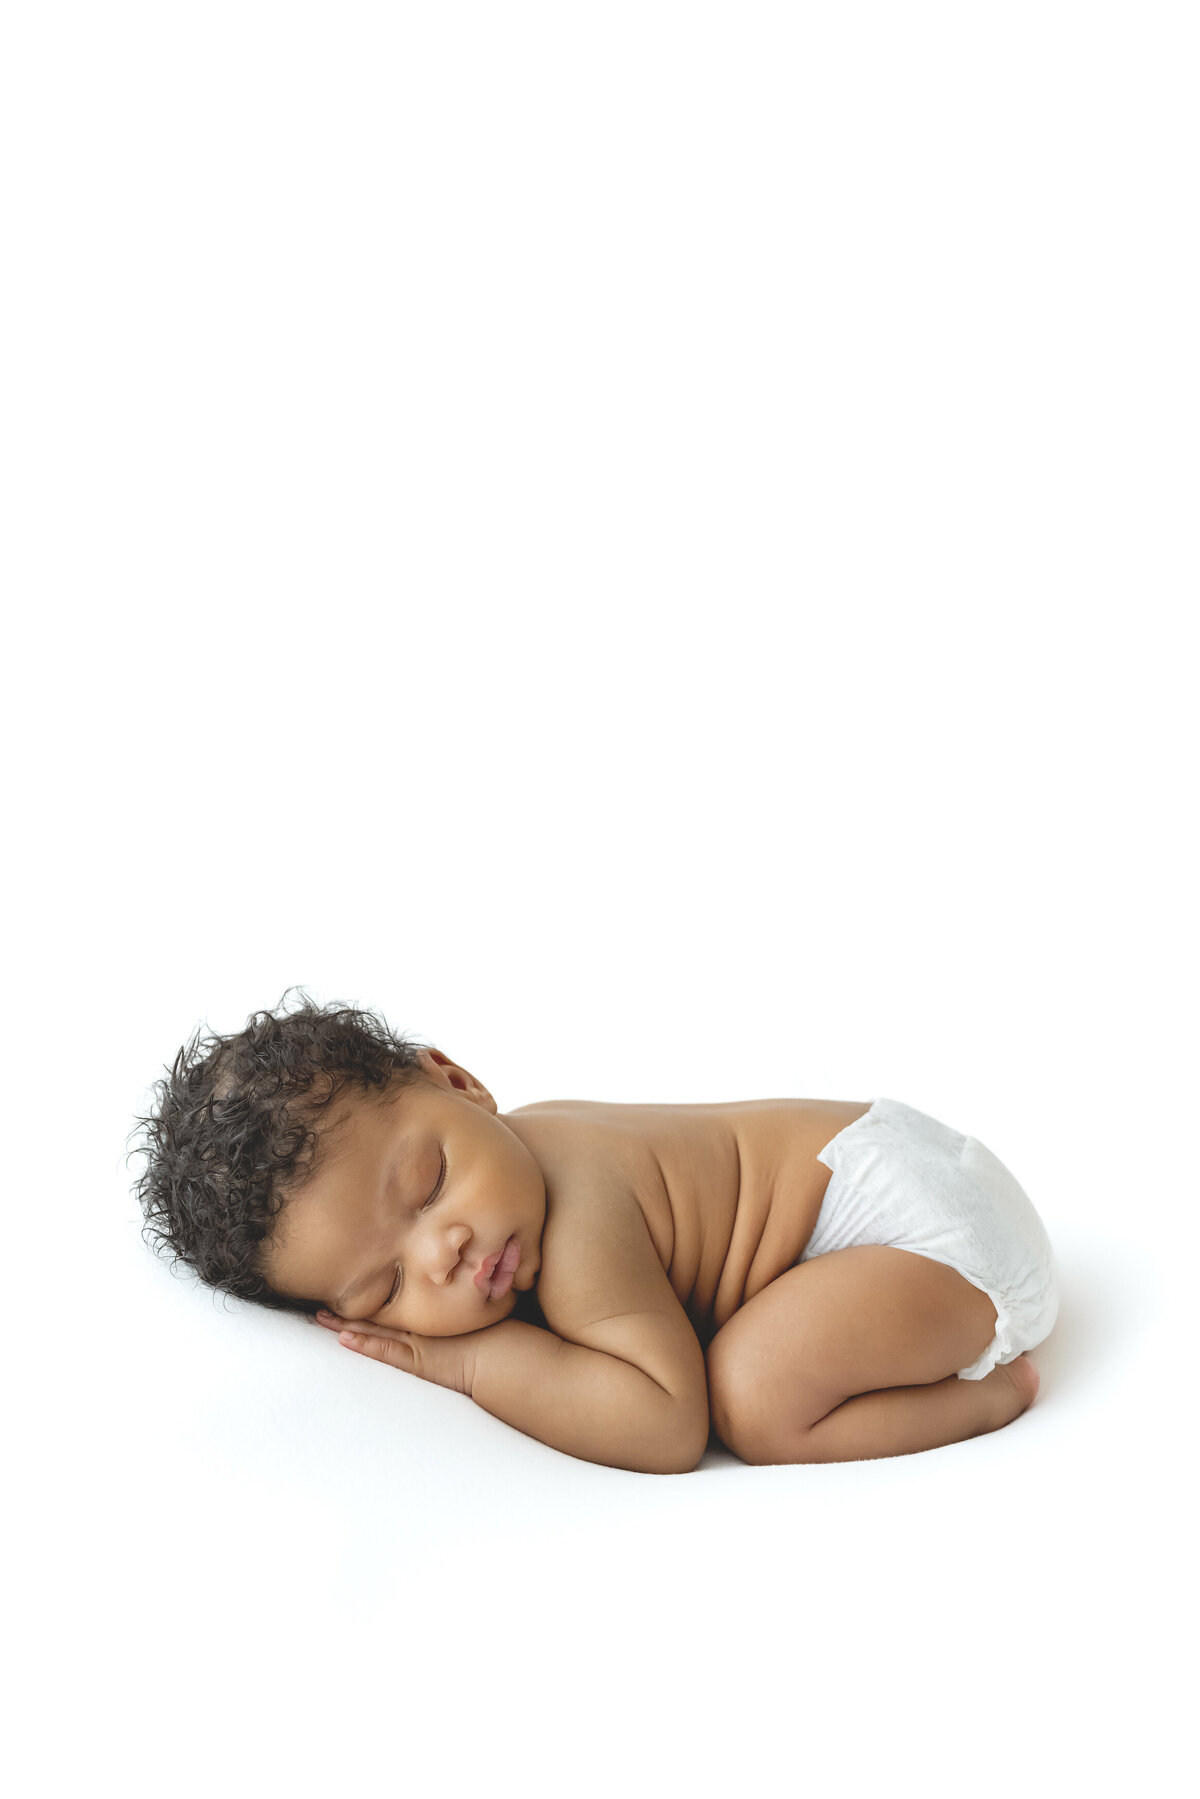 Chandler newborn photographer | Reaj Roberts Photography00038